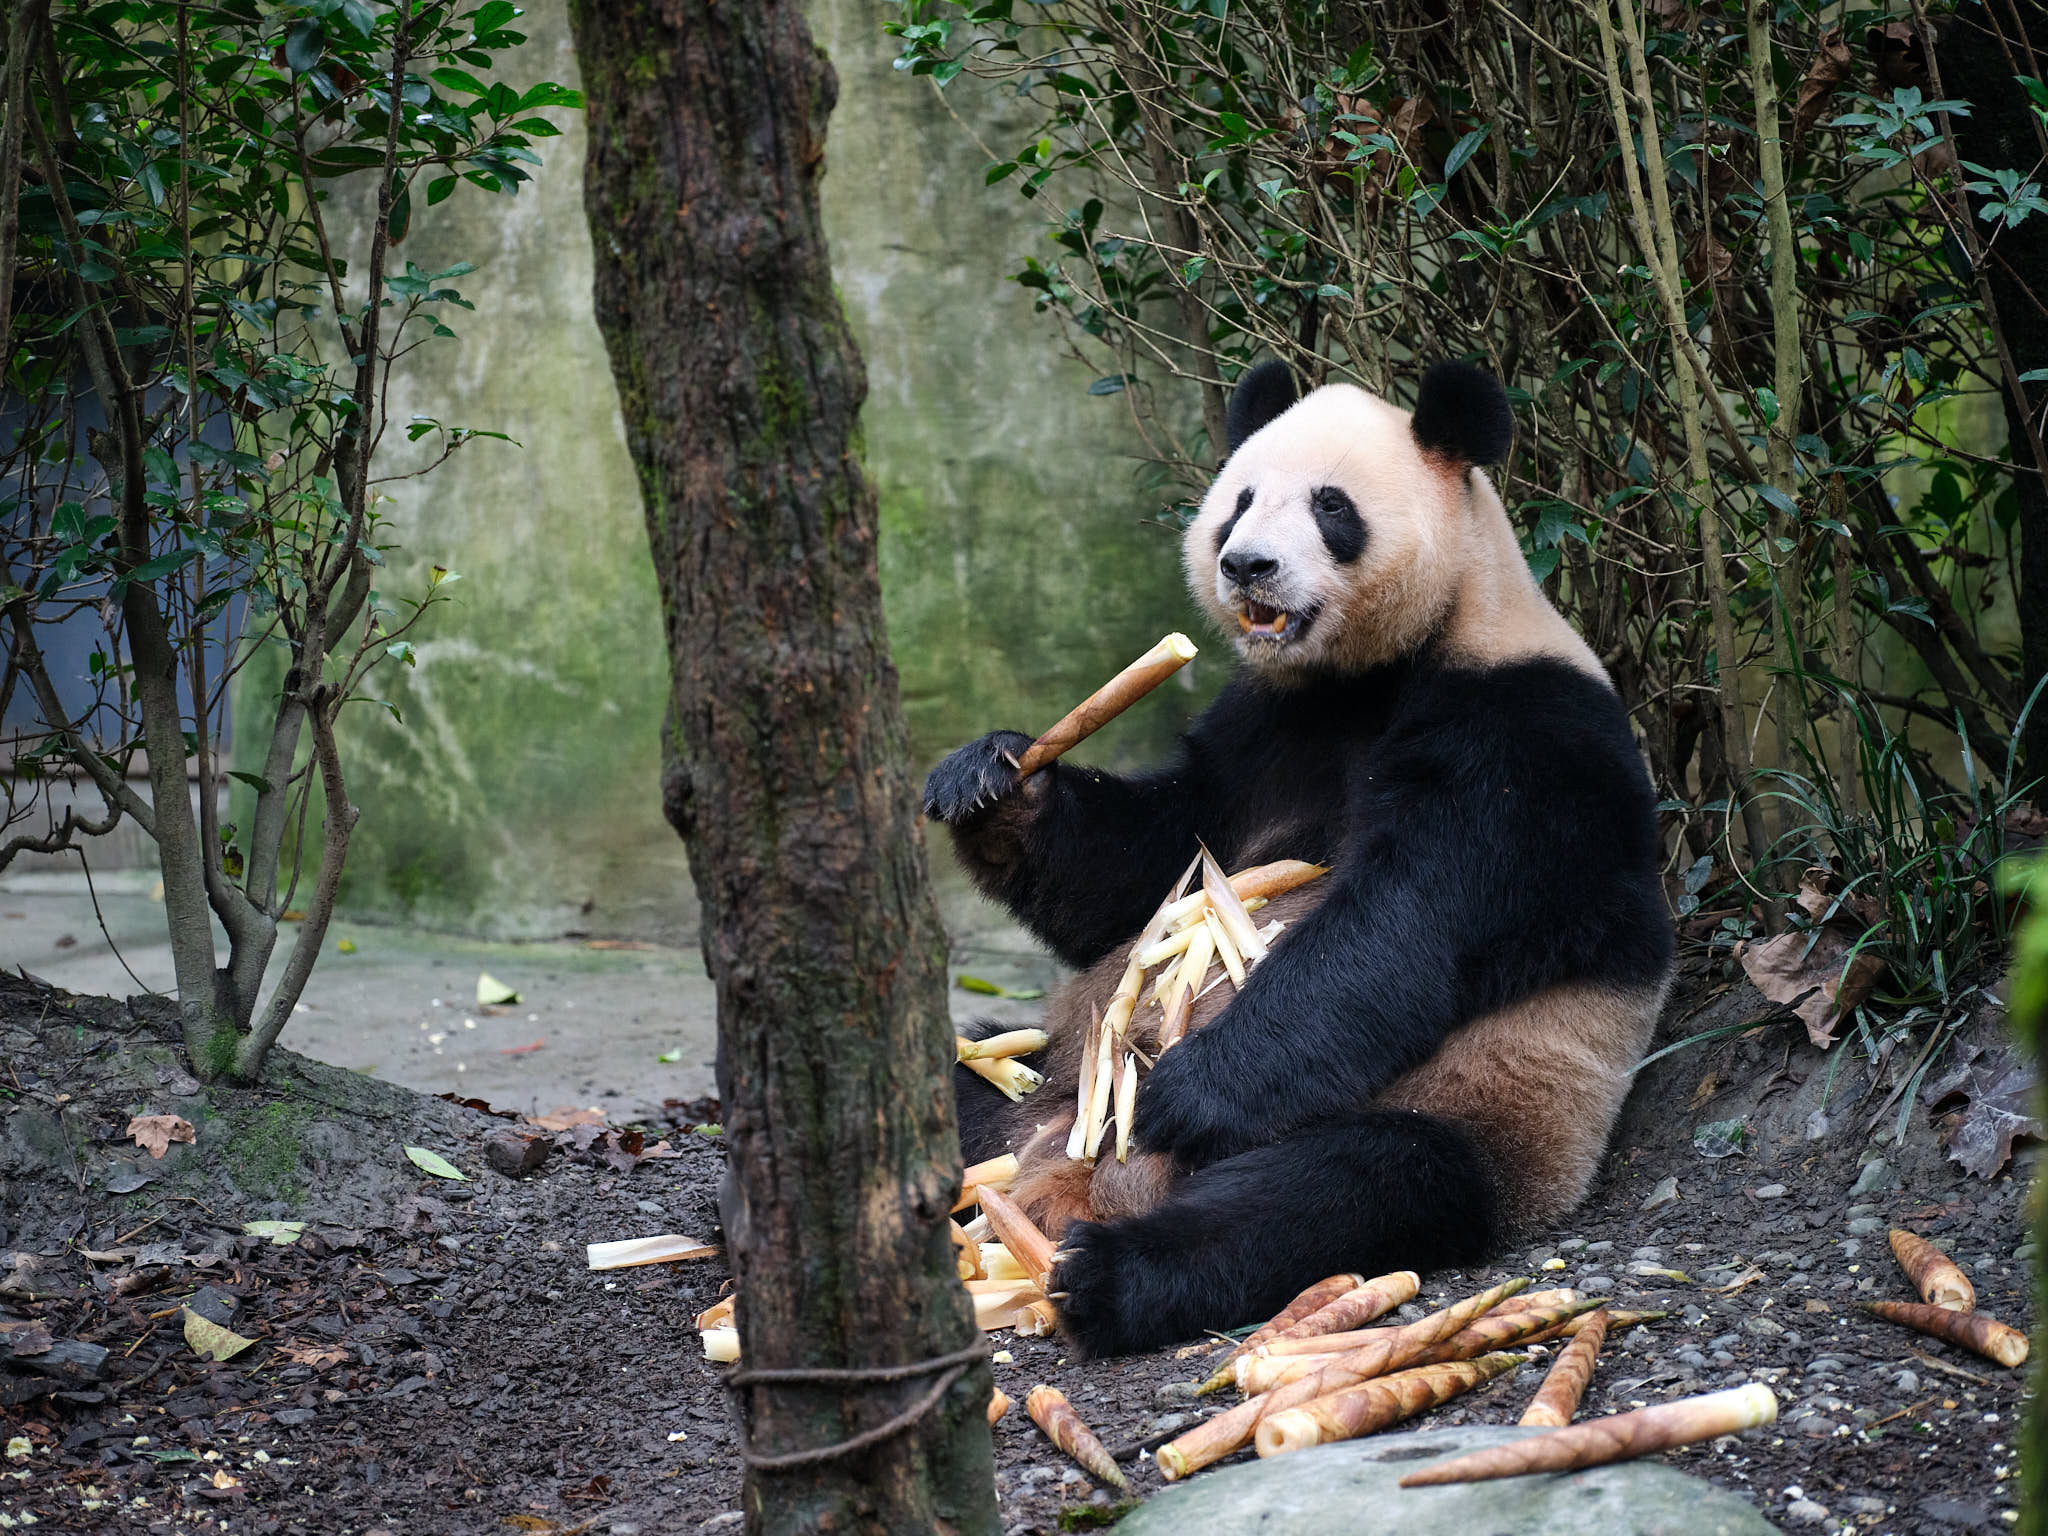 Panda smiling and eating bamboo at Chengdu Giant Panda Research Centre